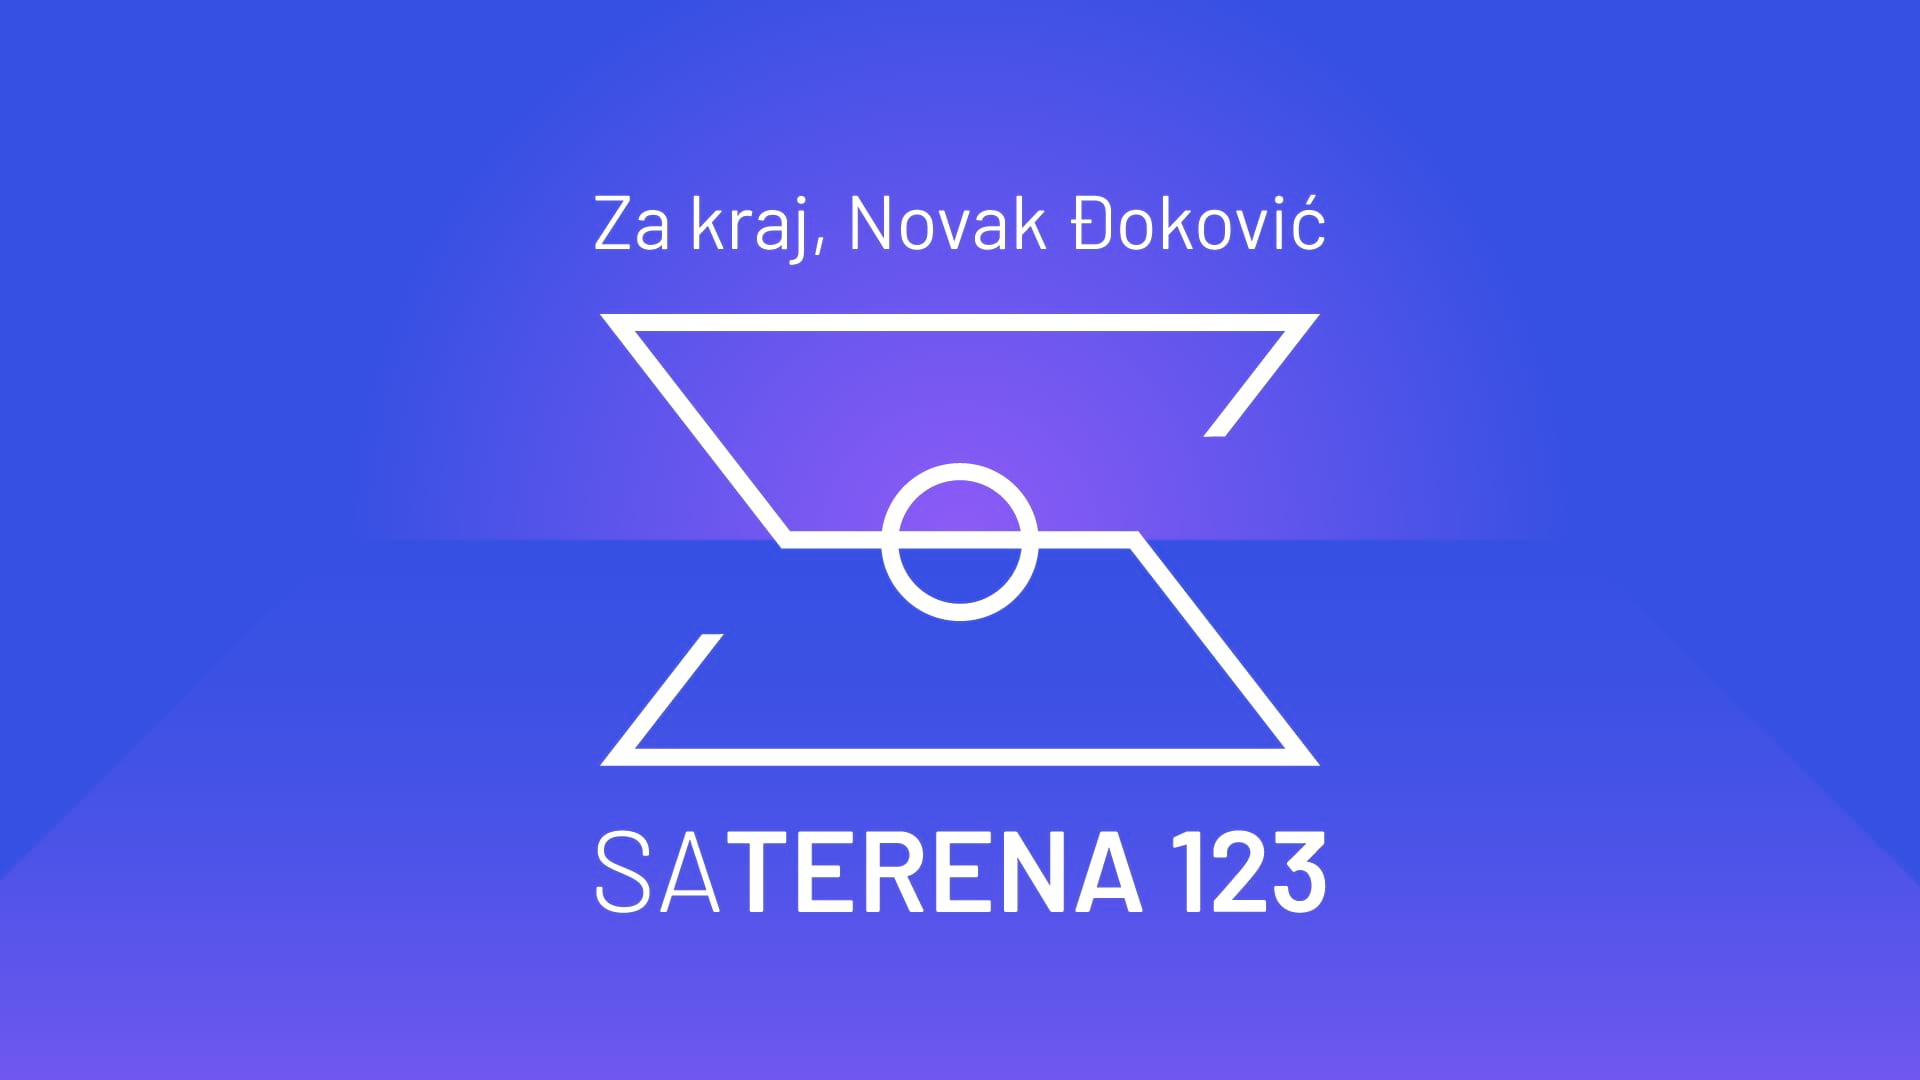 Sa terena 123: Za kraj, Novak Đoković